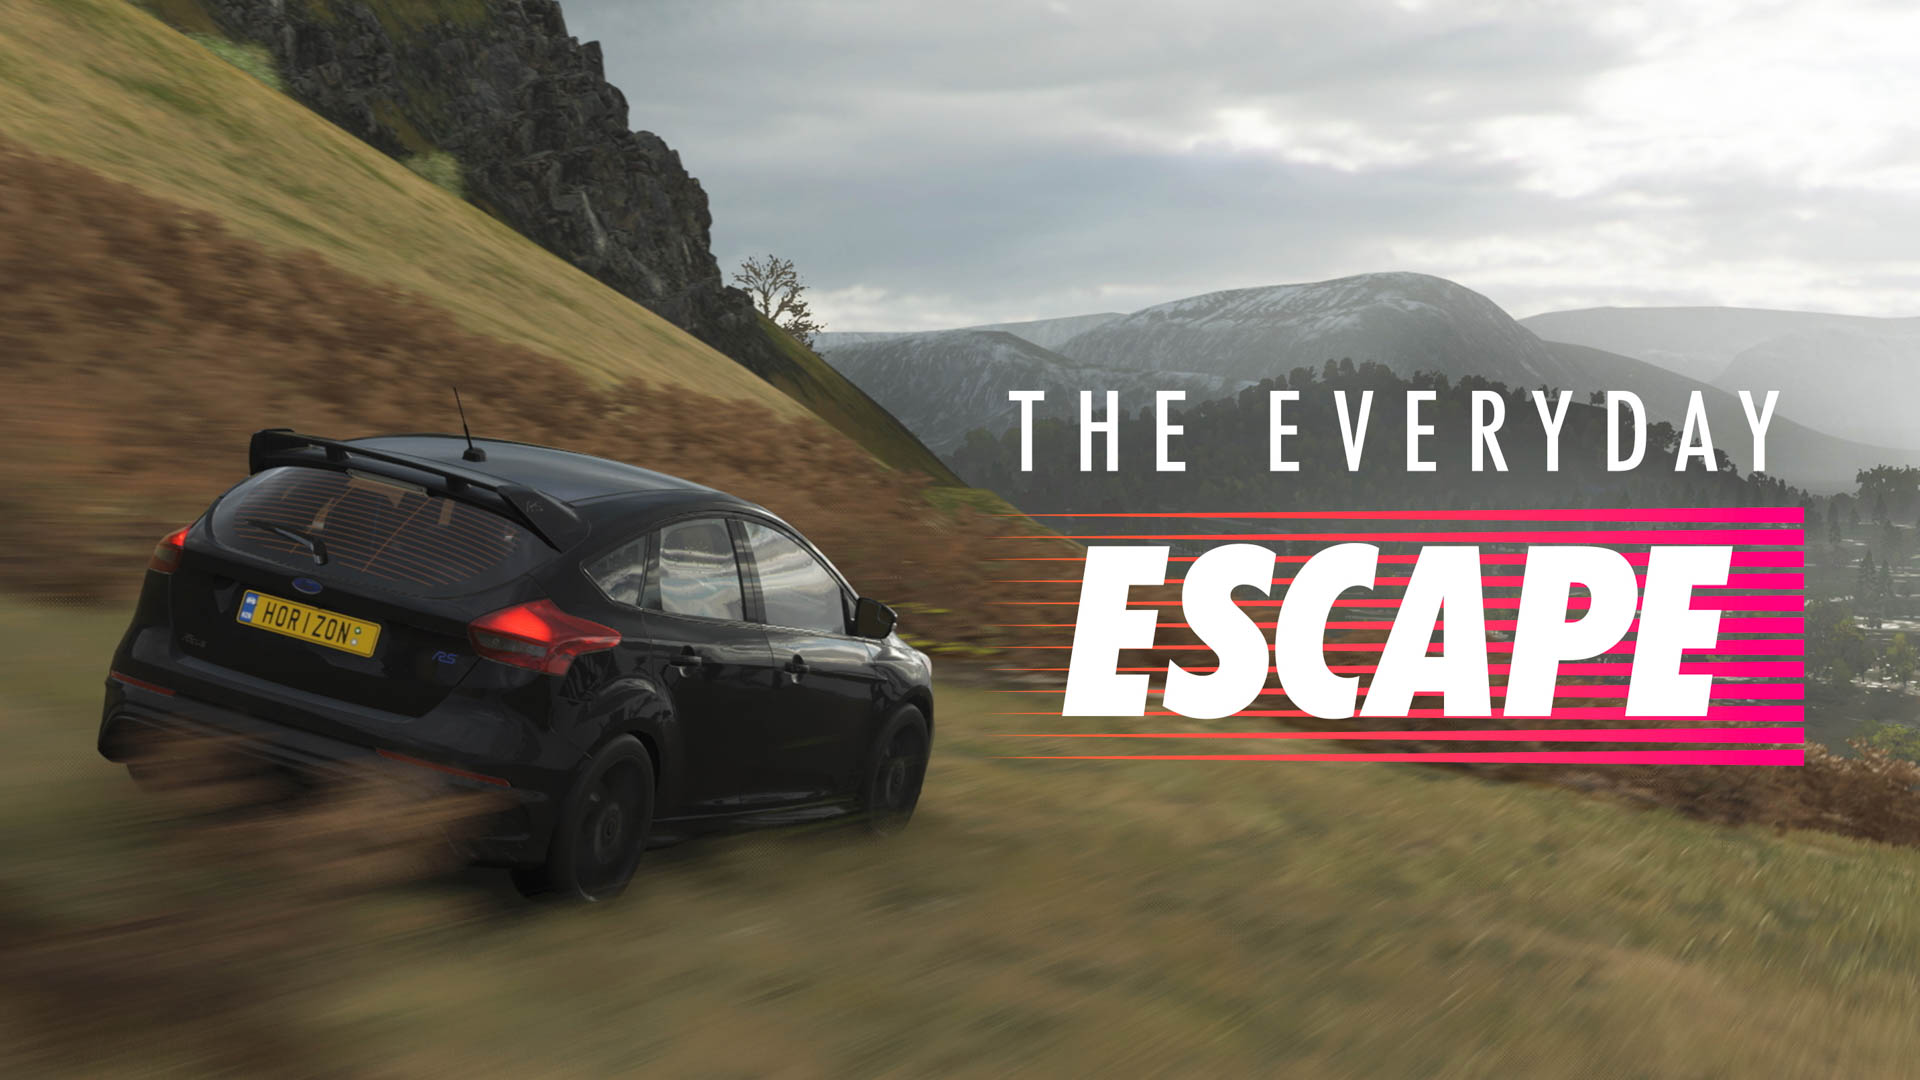 Everyday Escape